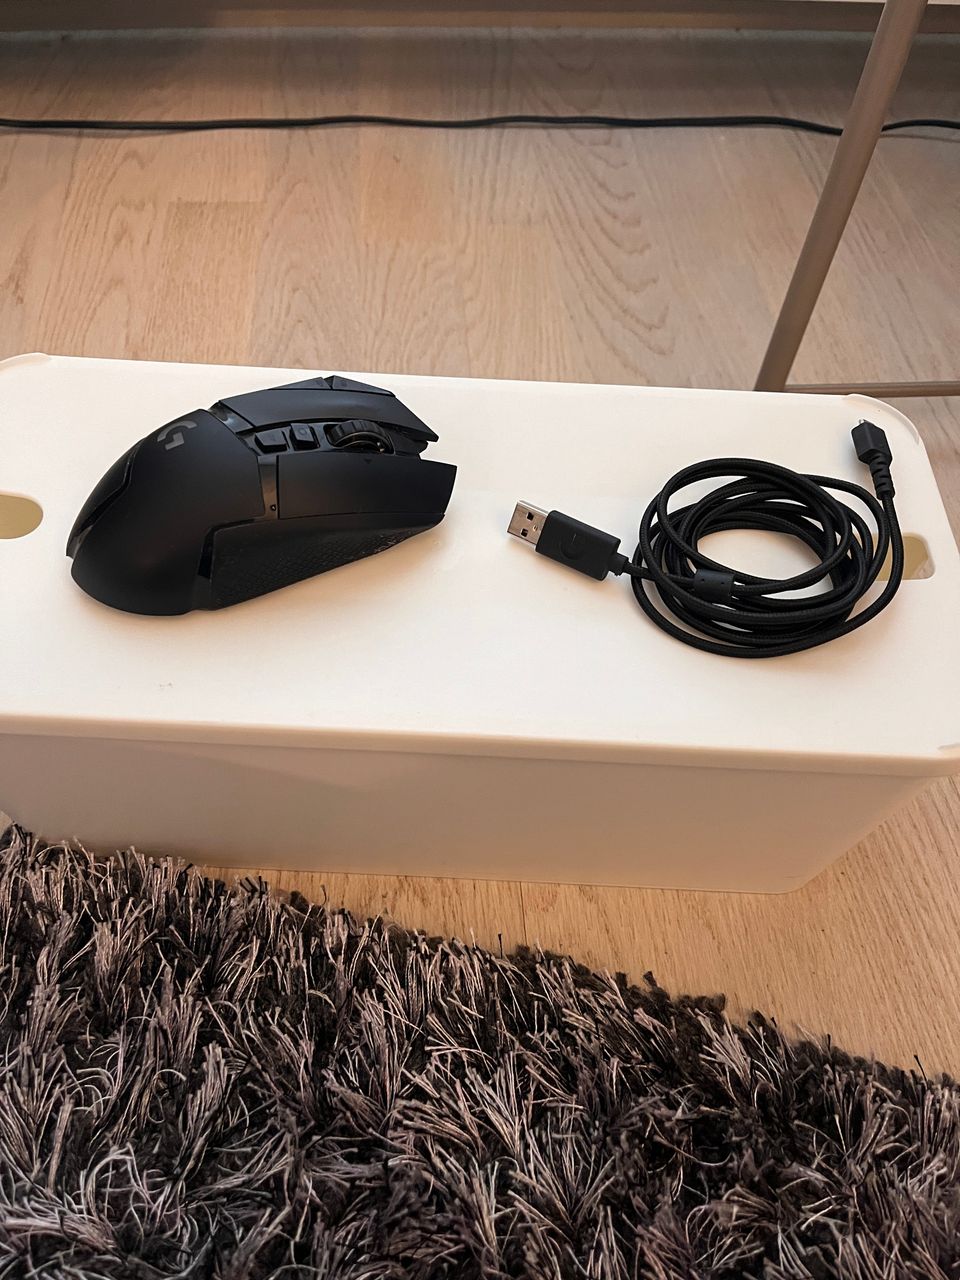 Logitech g502 Lightspeed / Wireless gaming mouse